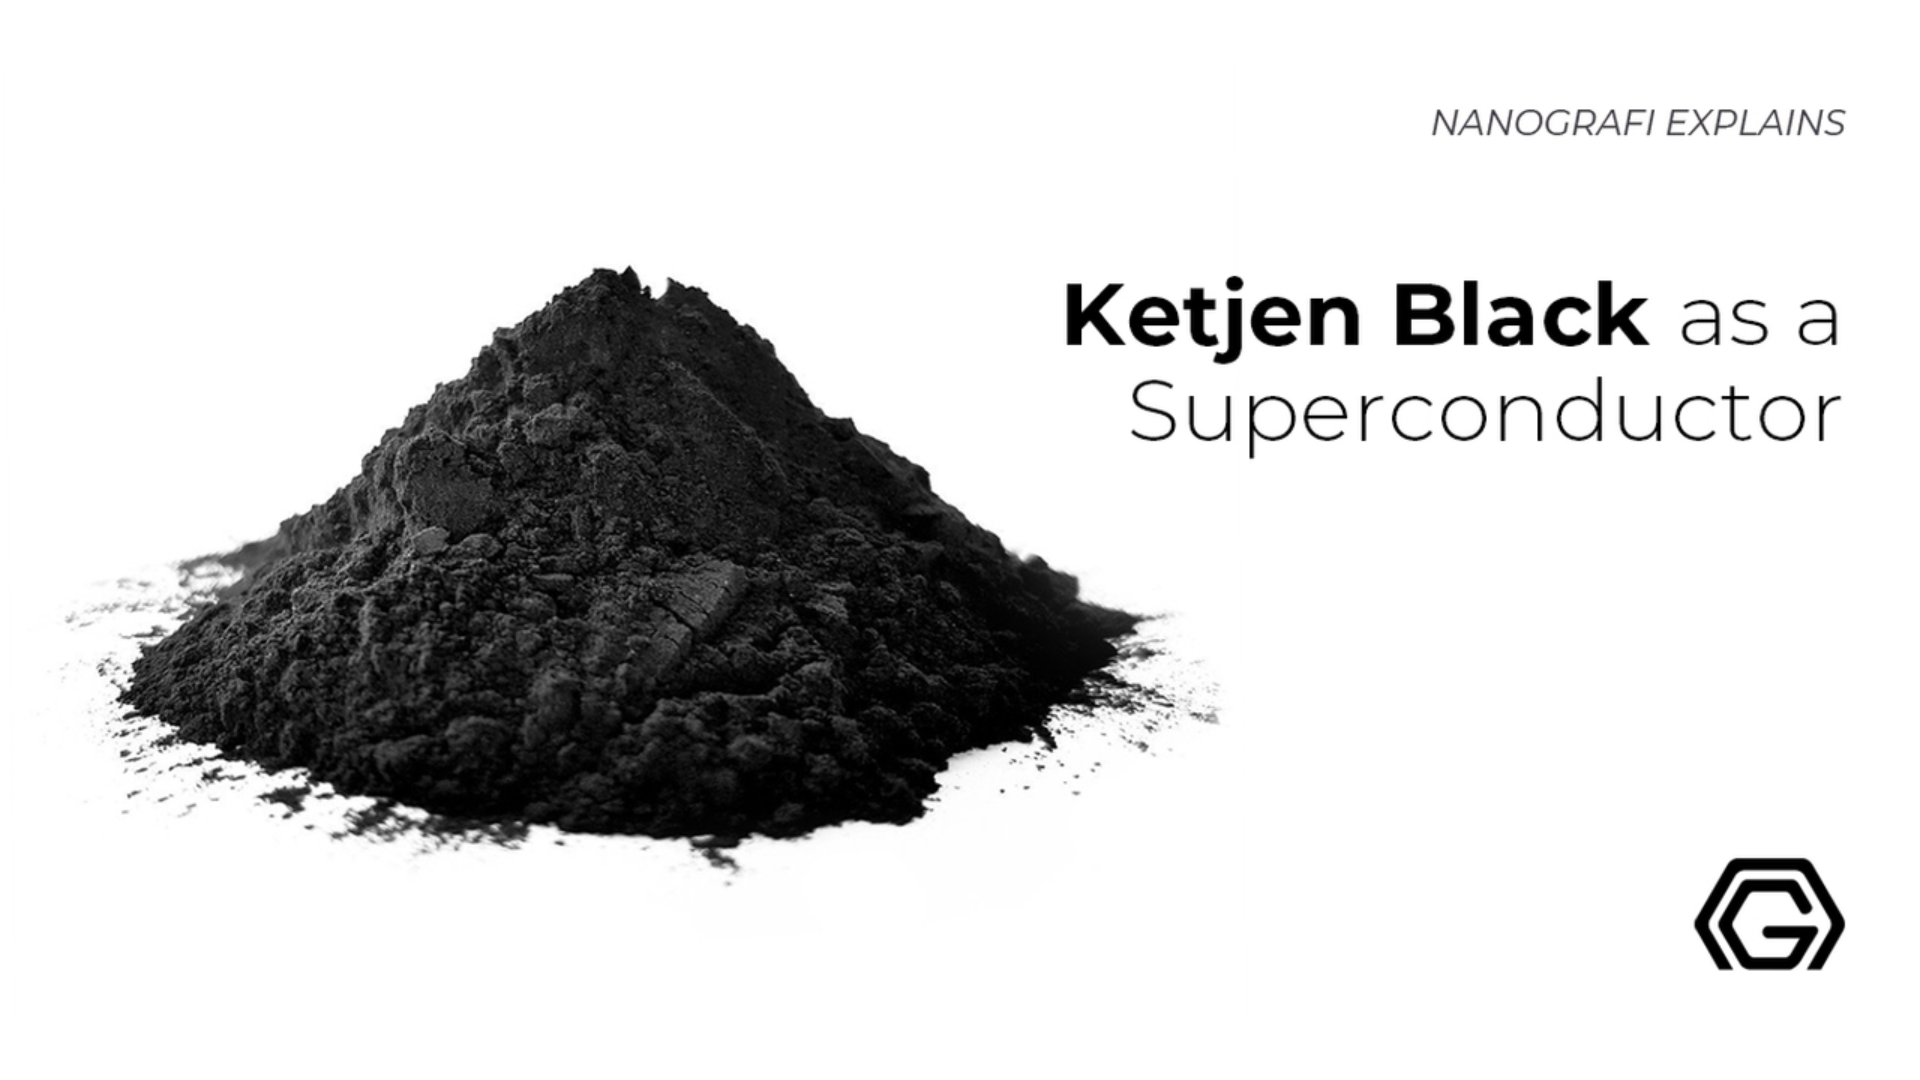 Properties of ketjenblack as a superconductor